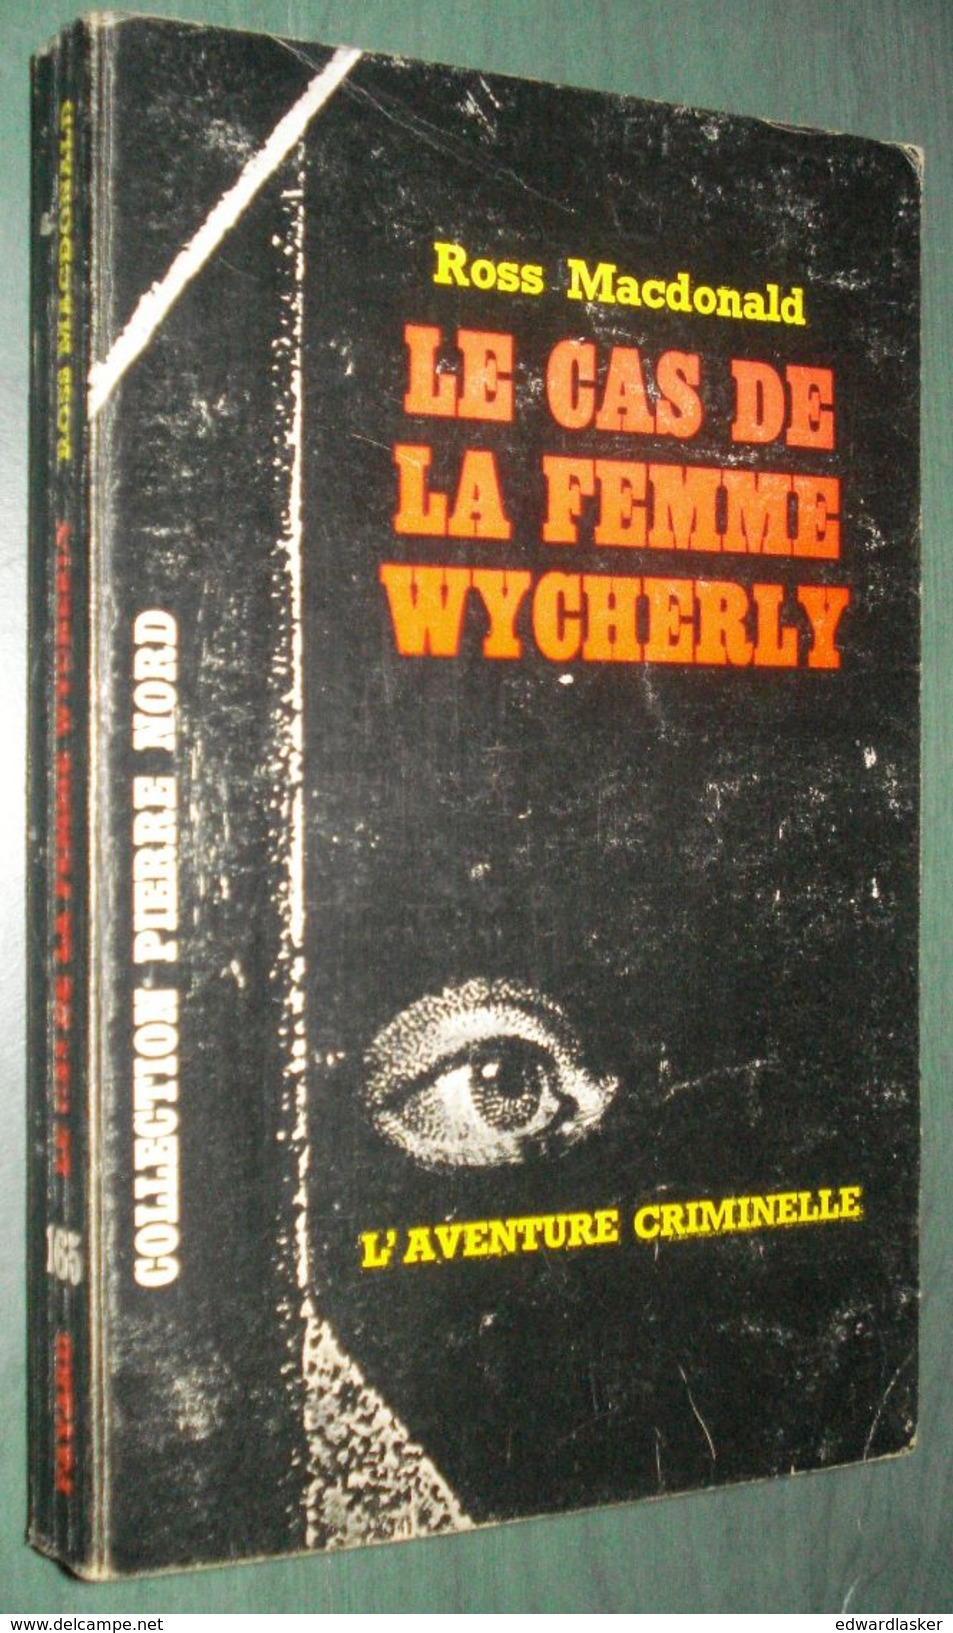 Coll. L´AVENTURE CRIMINELLE N°165 : Le Cas De La Femme Wycherly //Ross Mac Donald - Fayard 1963 [2] - Arthème Fayard - Autres